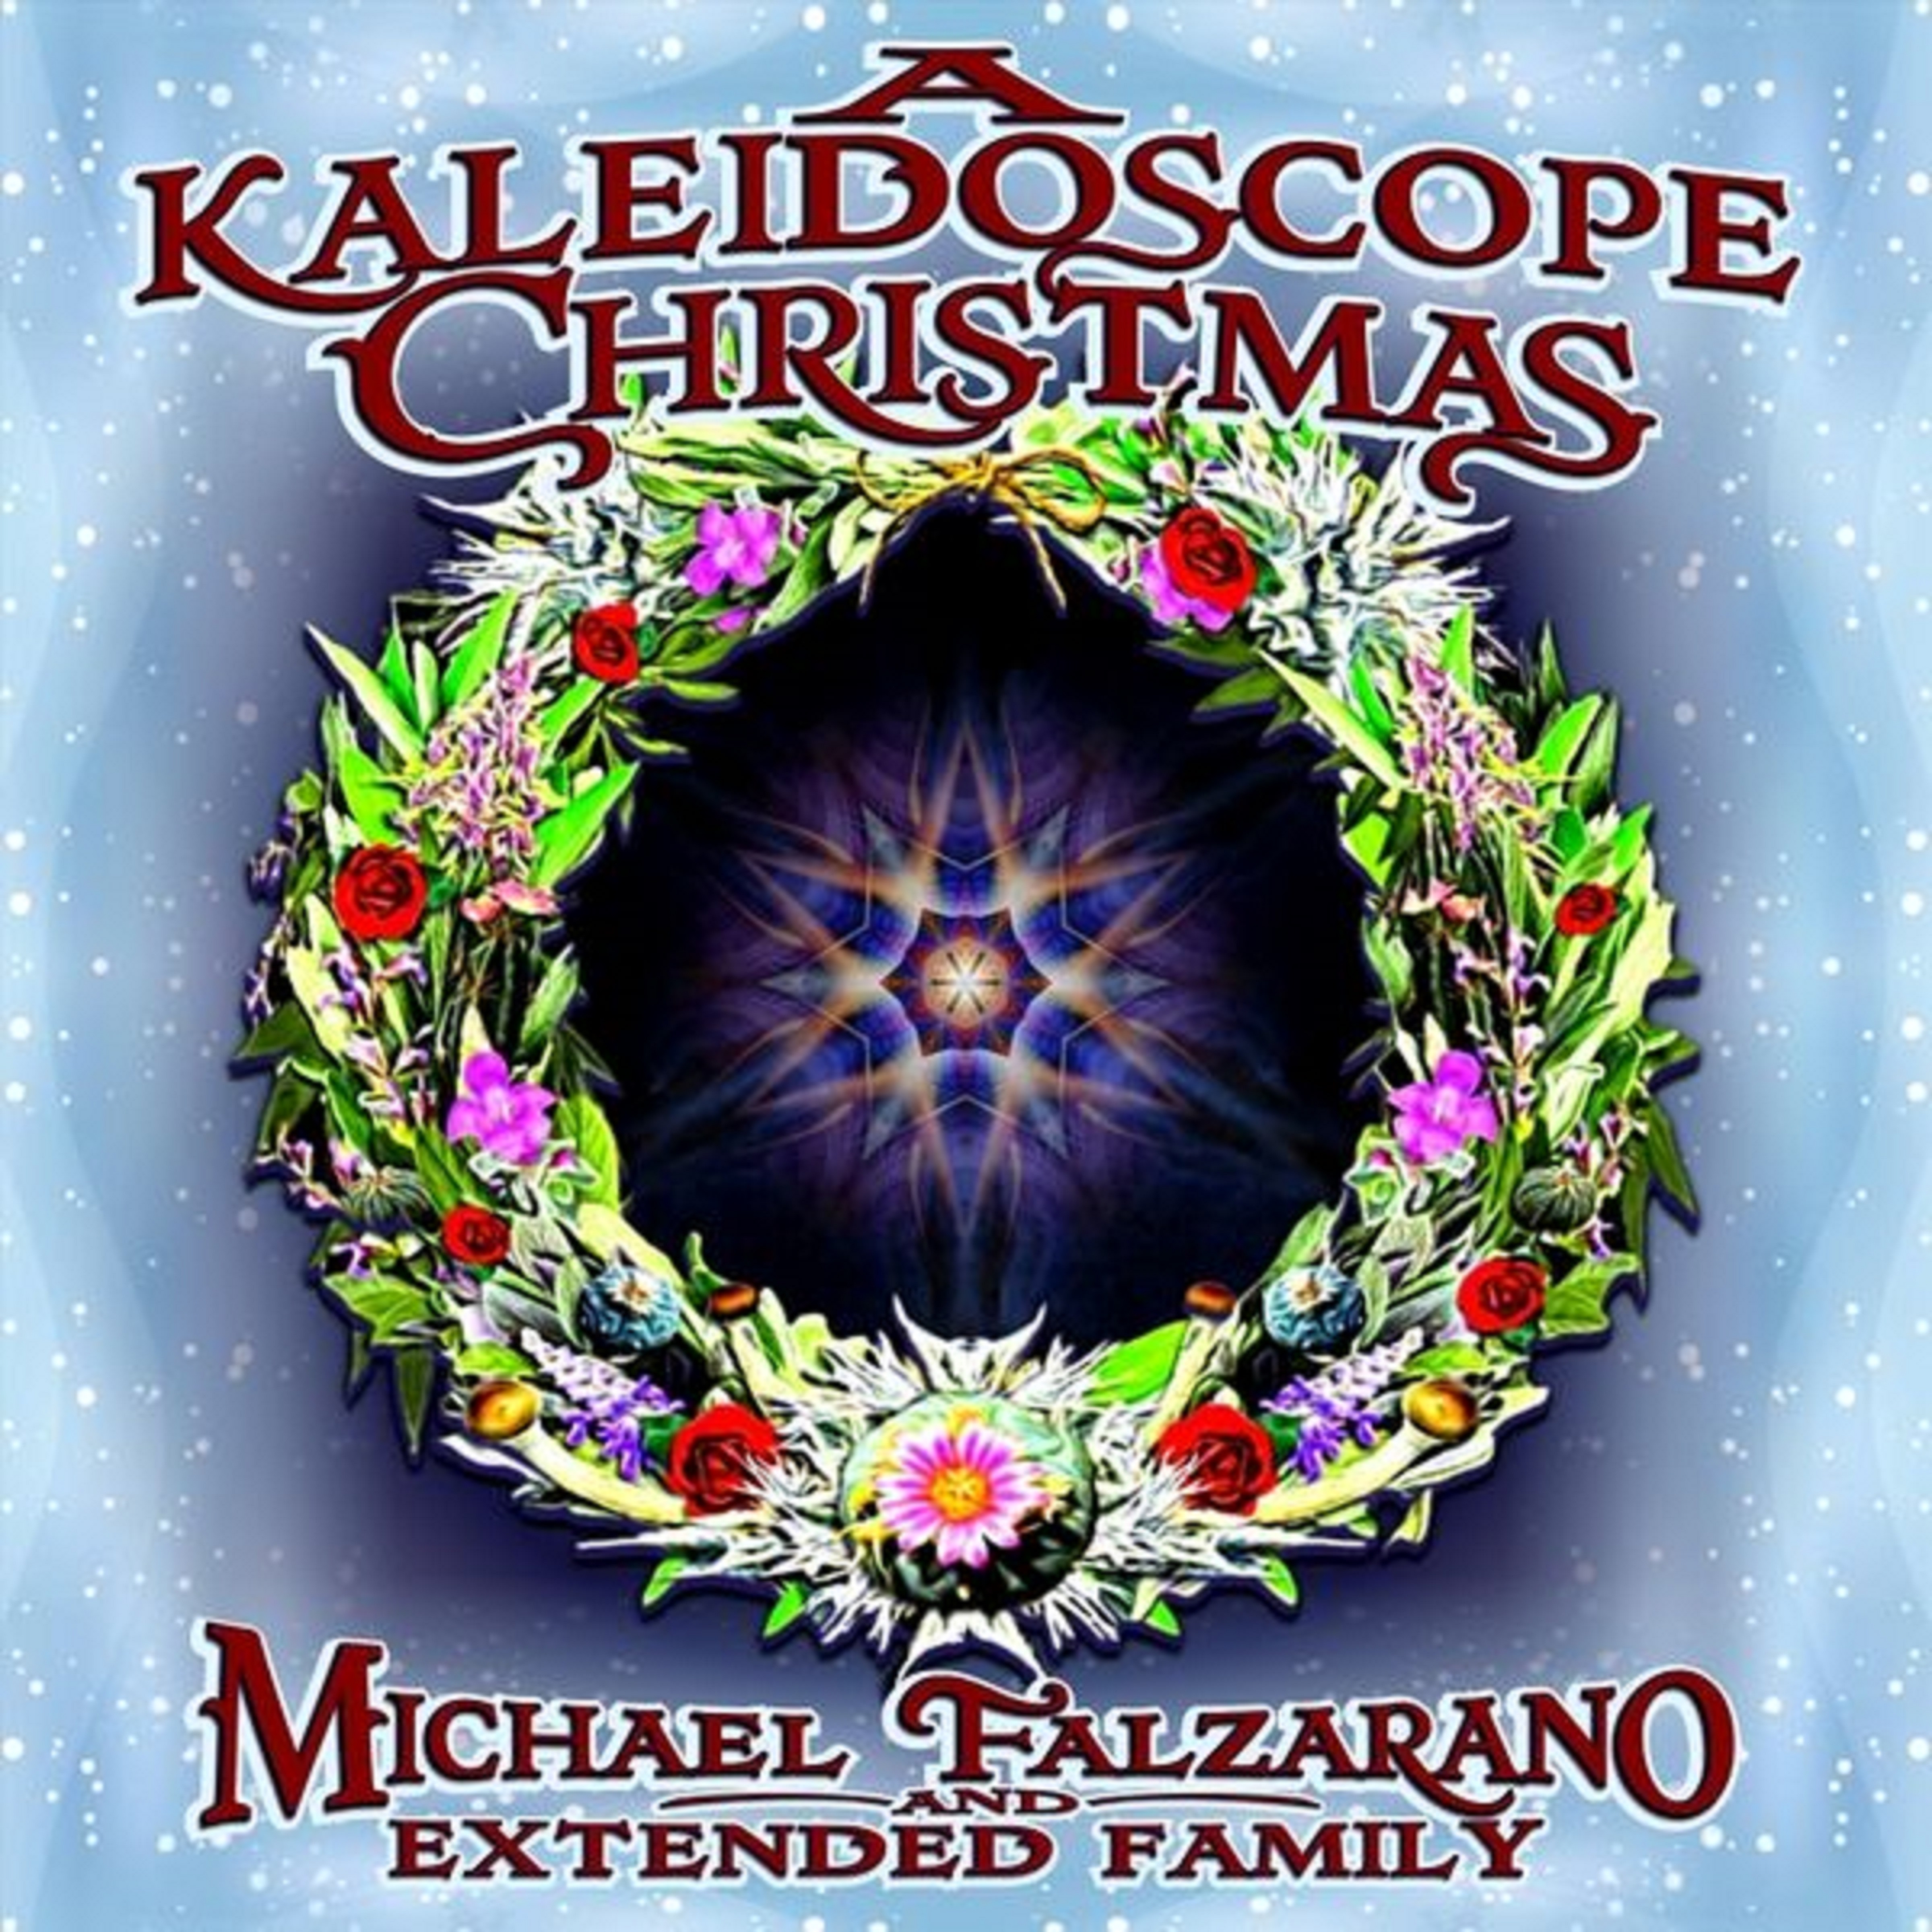 A Kaleidoscope Christmas